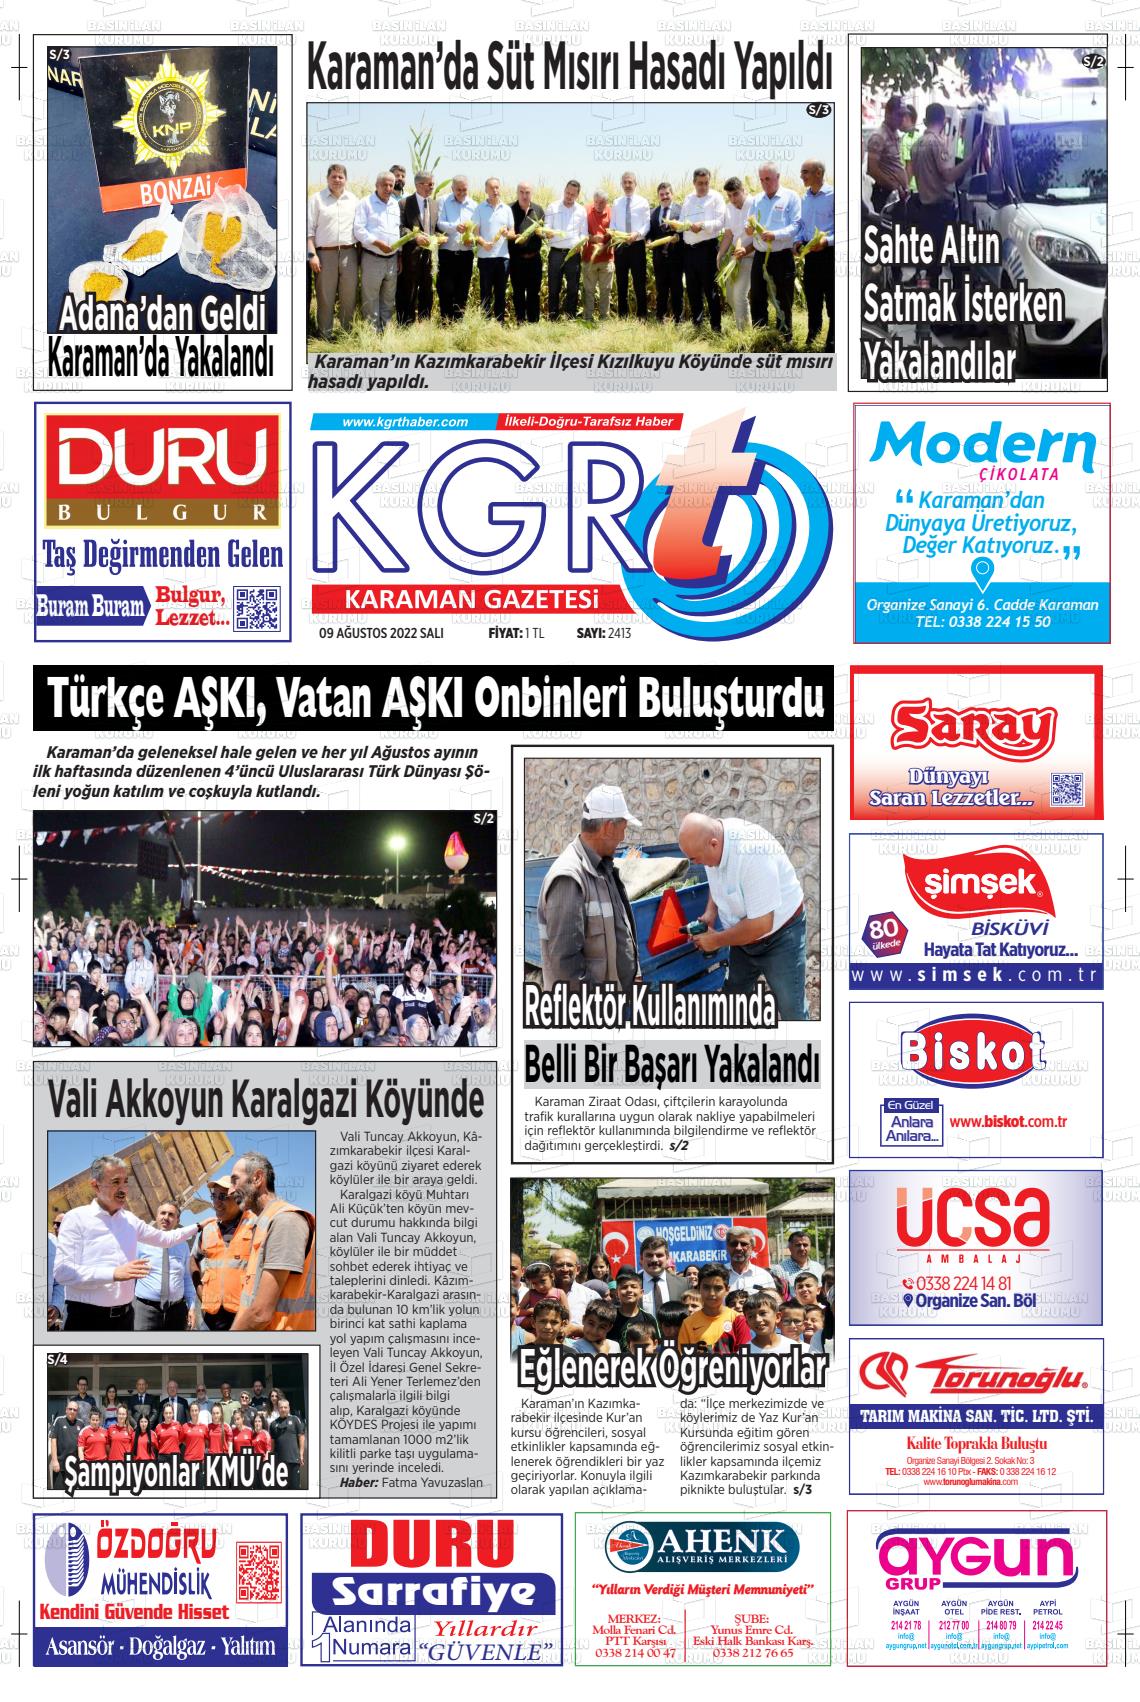 09 Ağustos 2022 Kgrt Karaman Gazete Manşeti